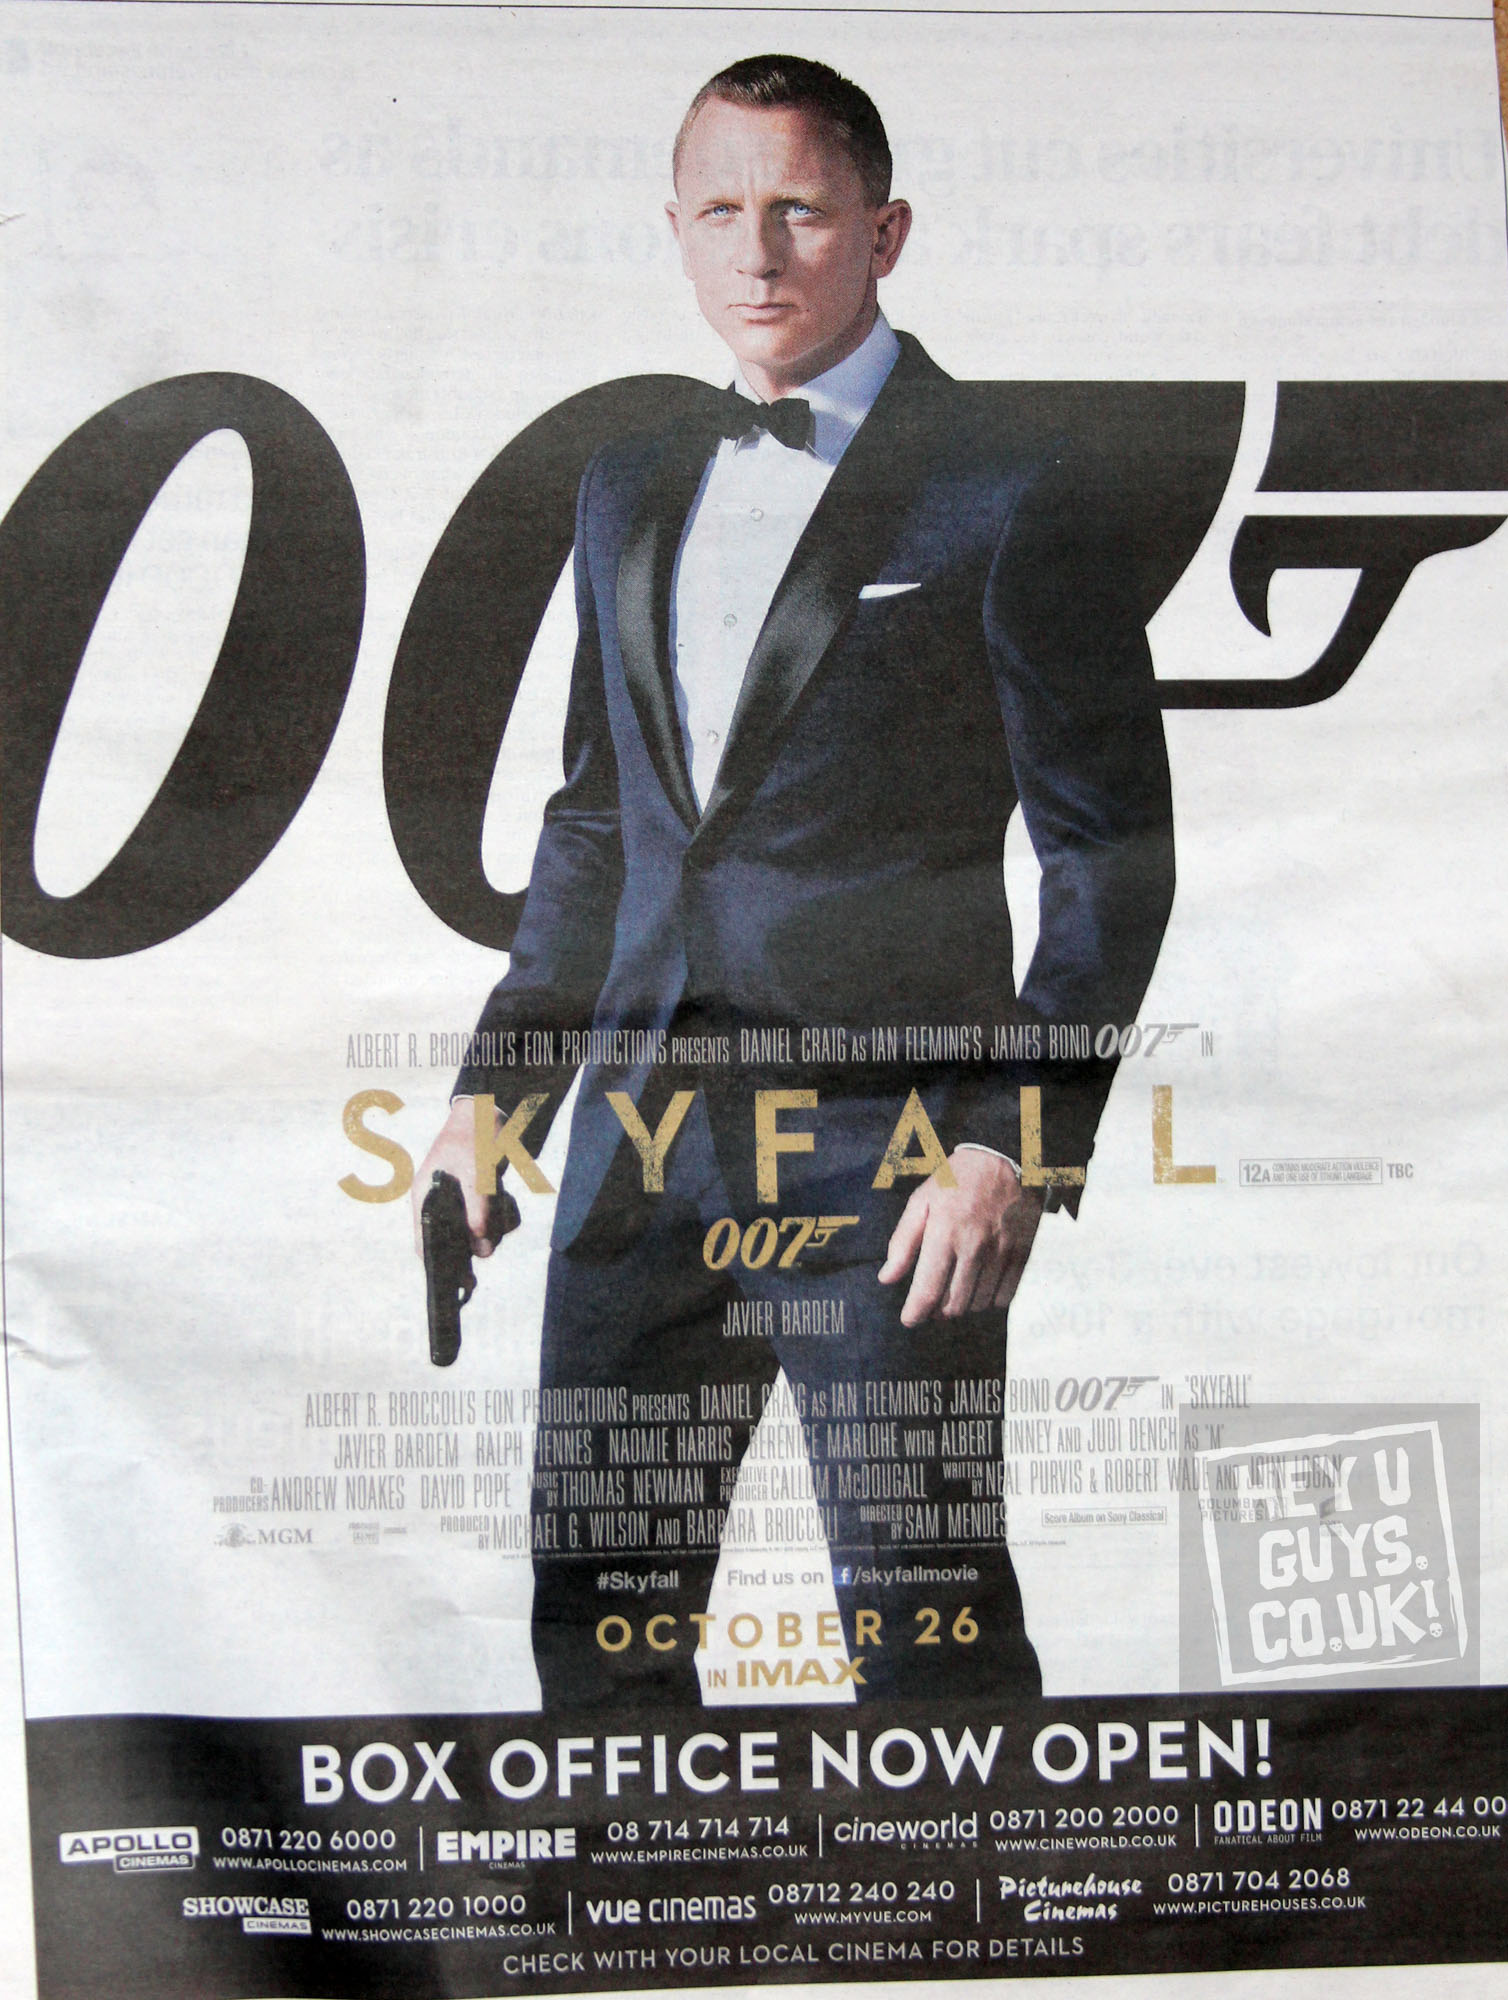 Skyfall Poster - Daniel Craig as James Bond